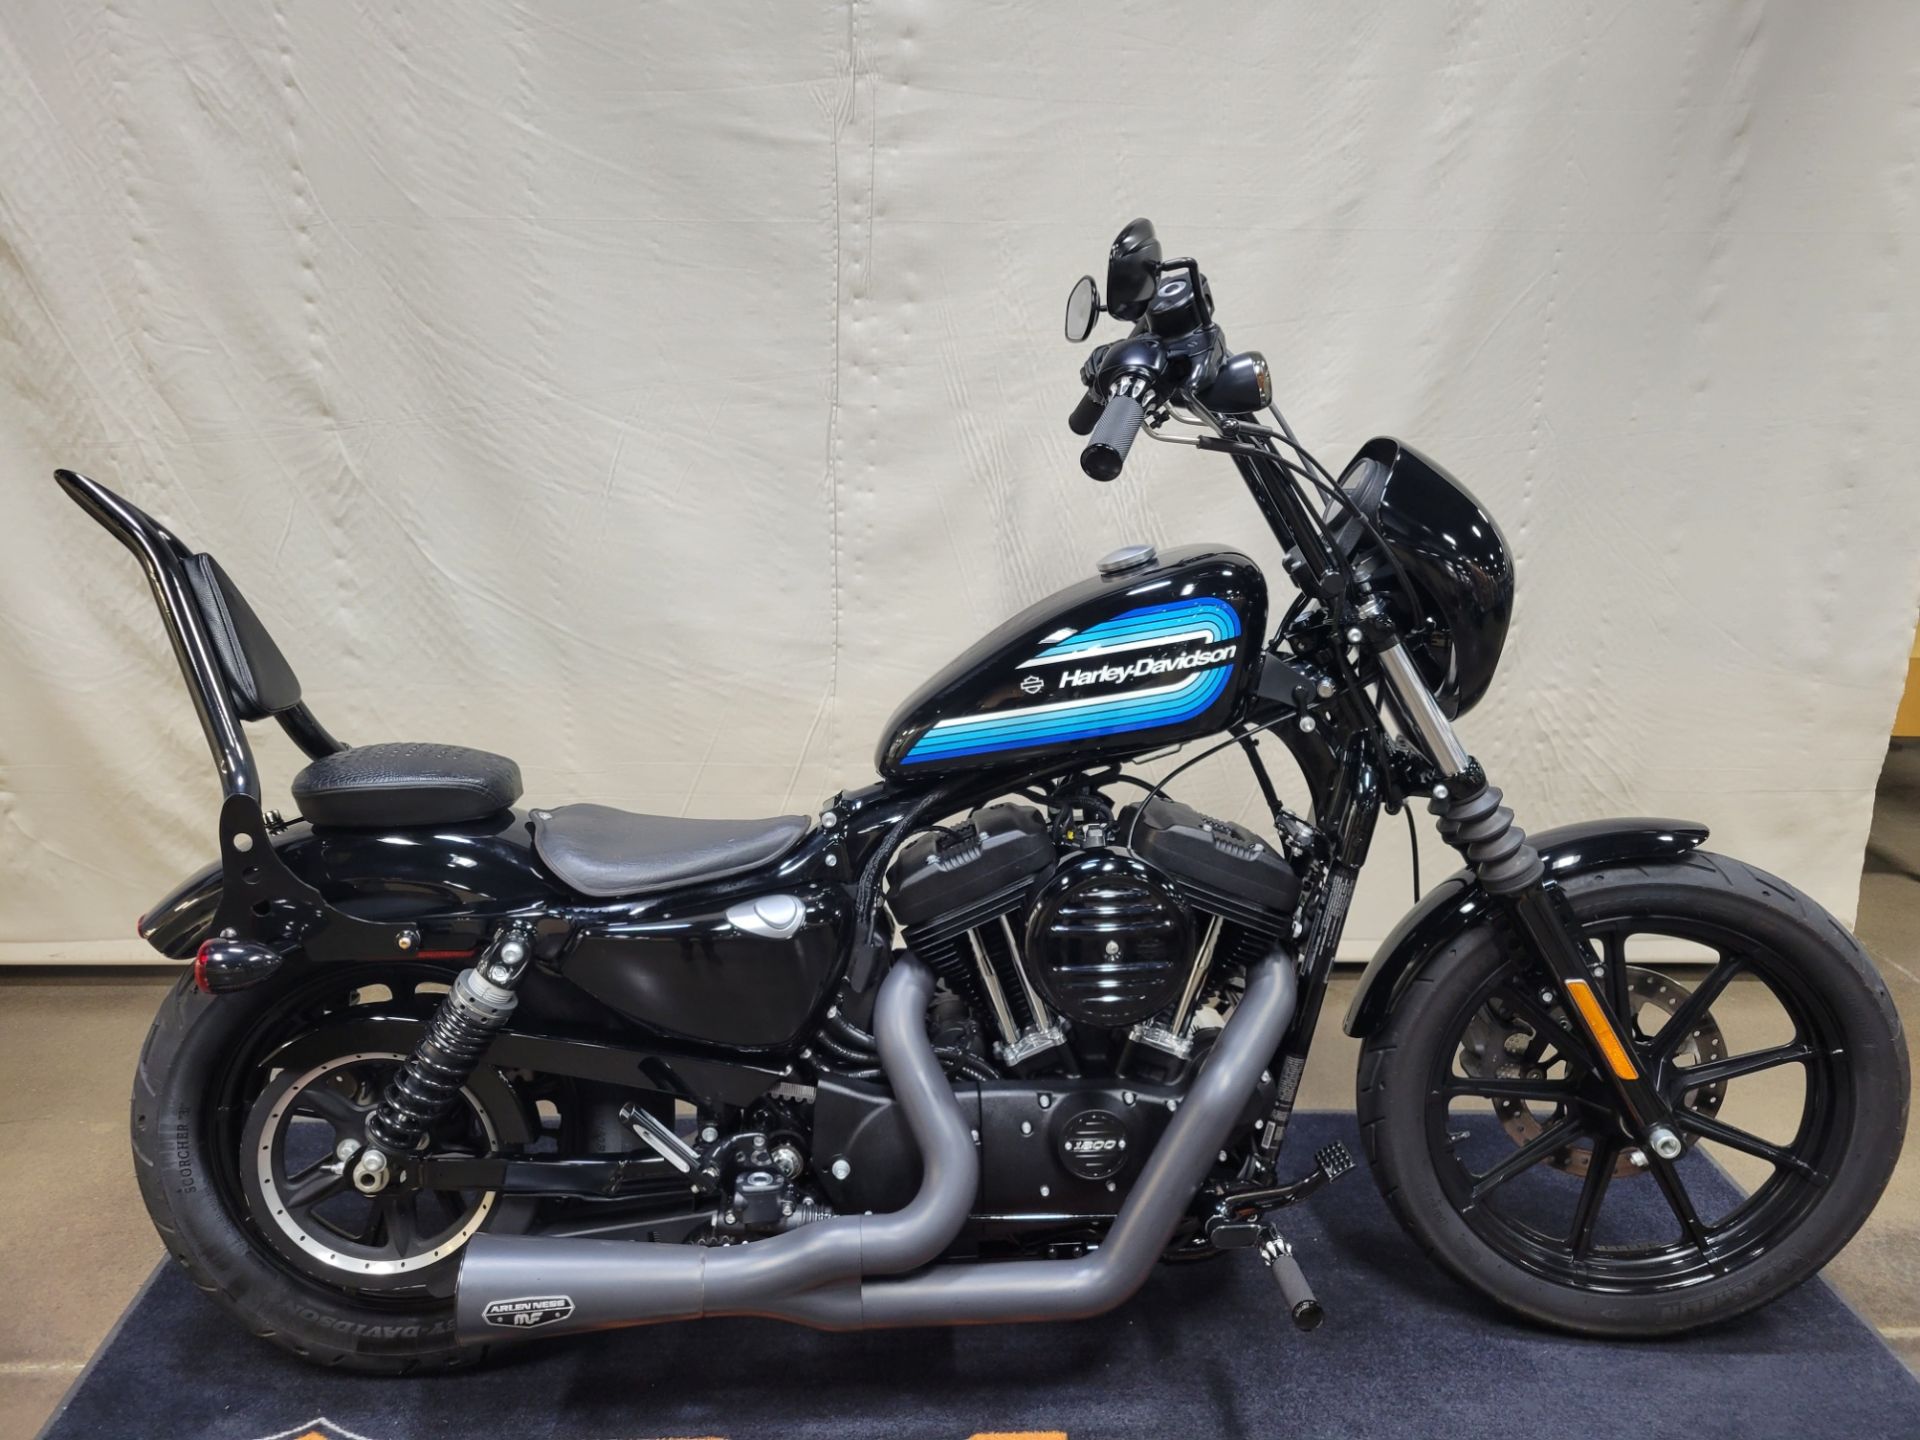 2019 Harley-Davidson Iron 1200™ in Syracuse, New York - Photo 1